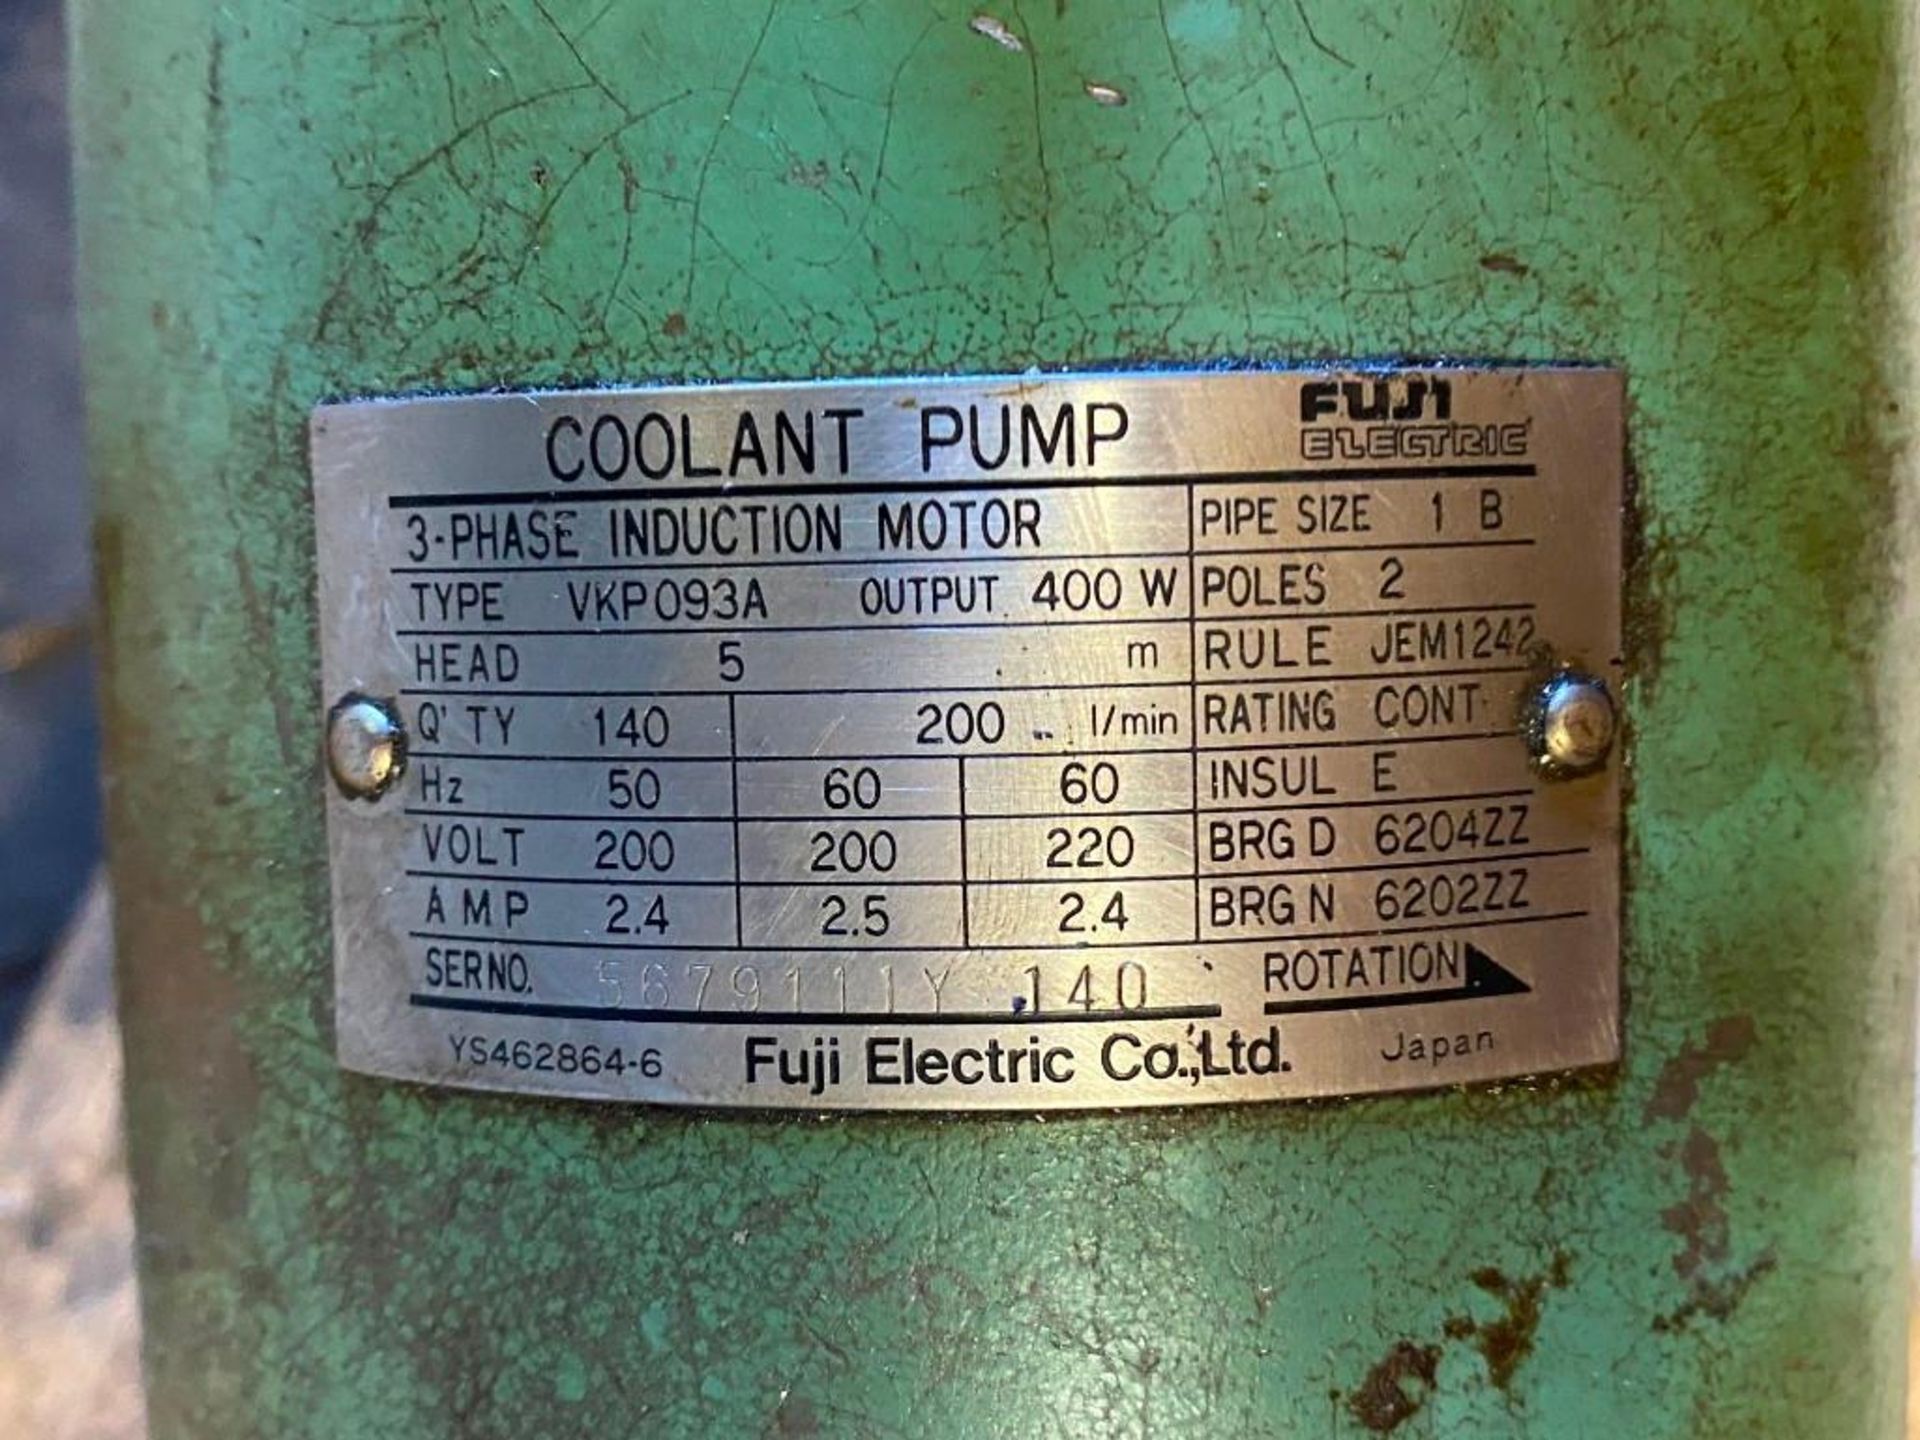 Fuji Electric #VKP093A Coolant Pump - Image 3 of 3